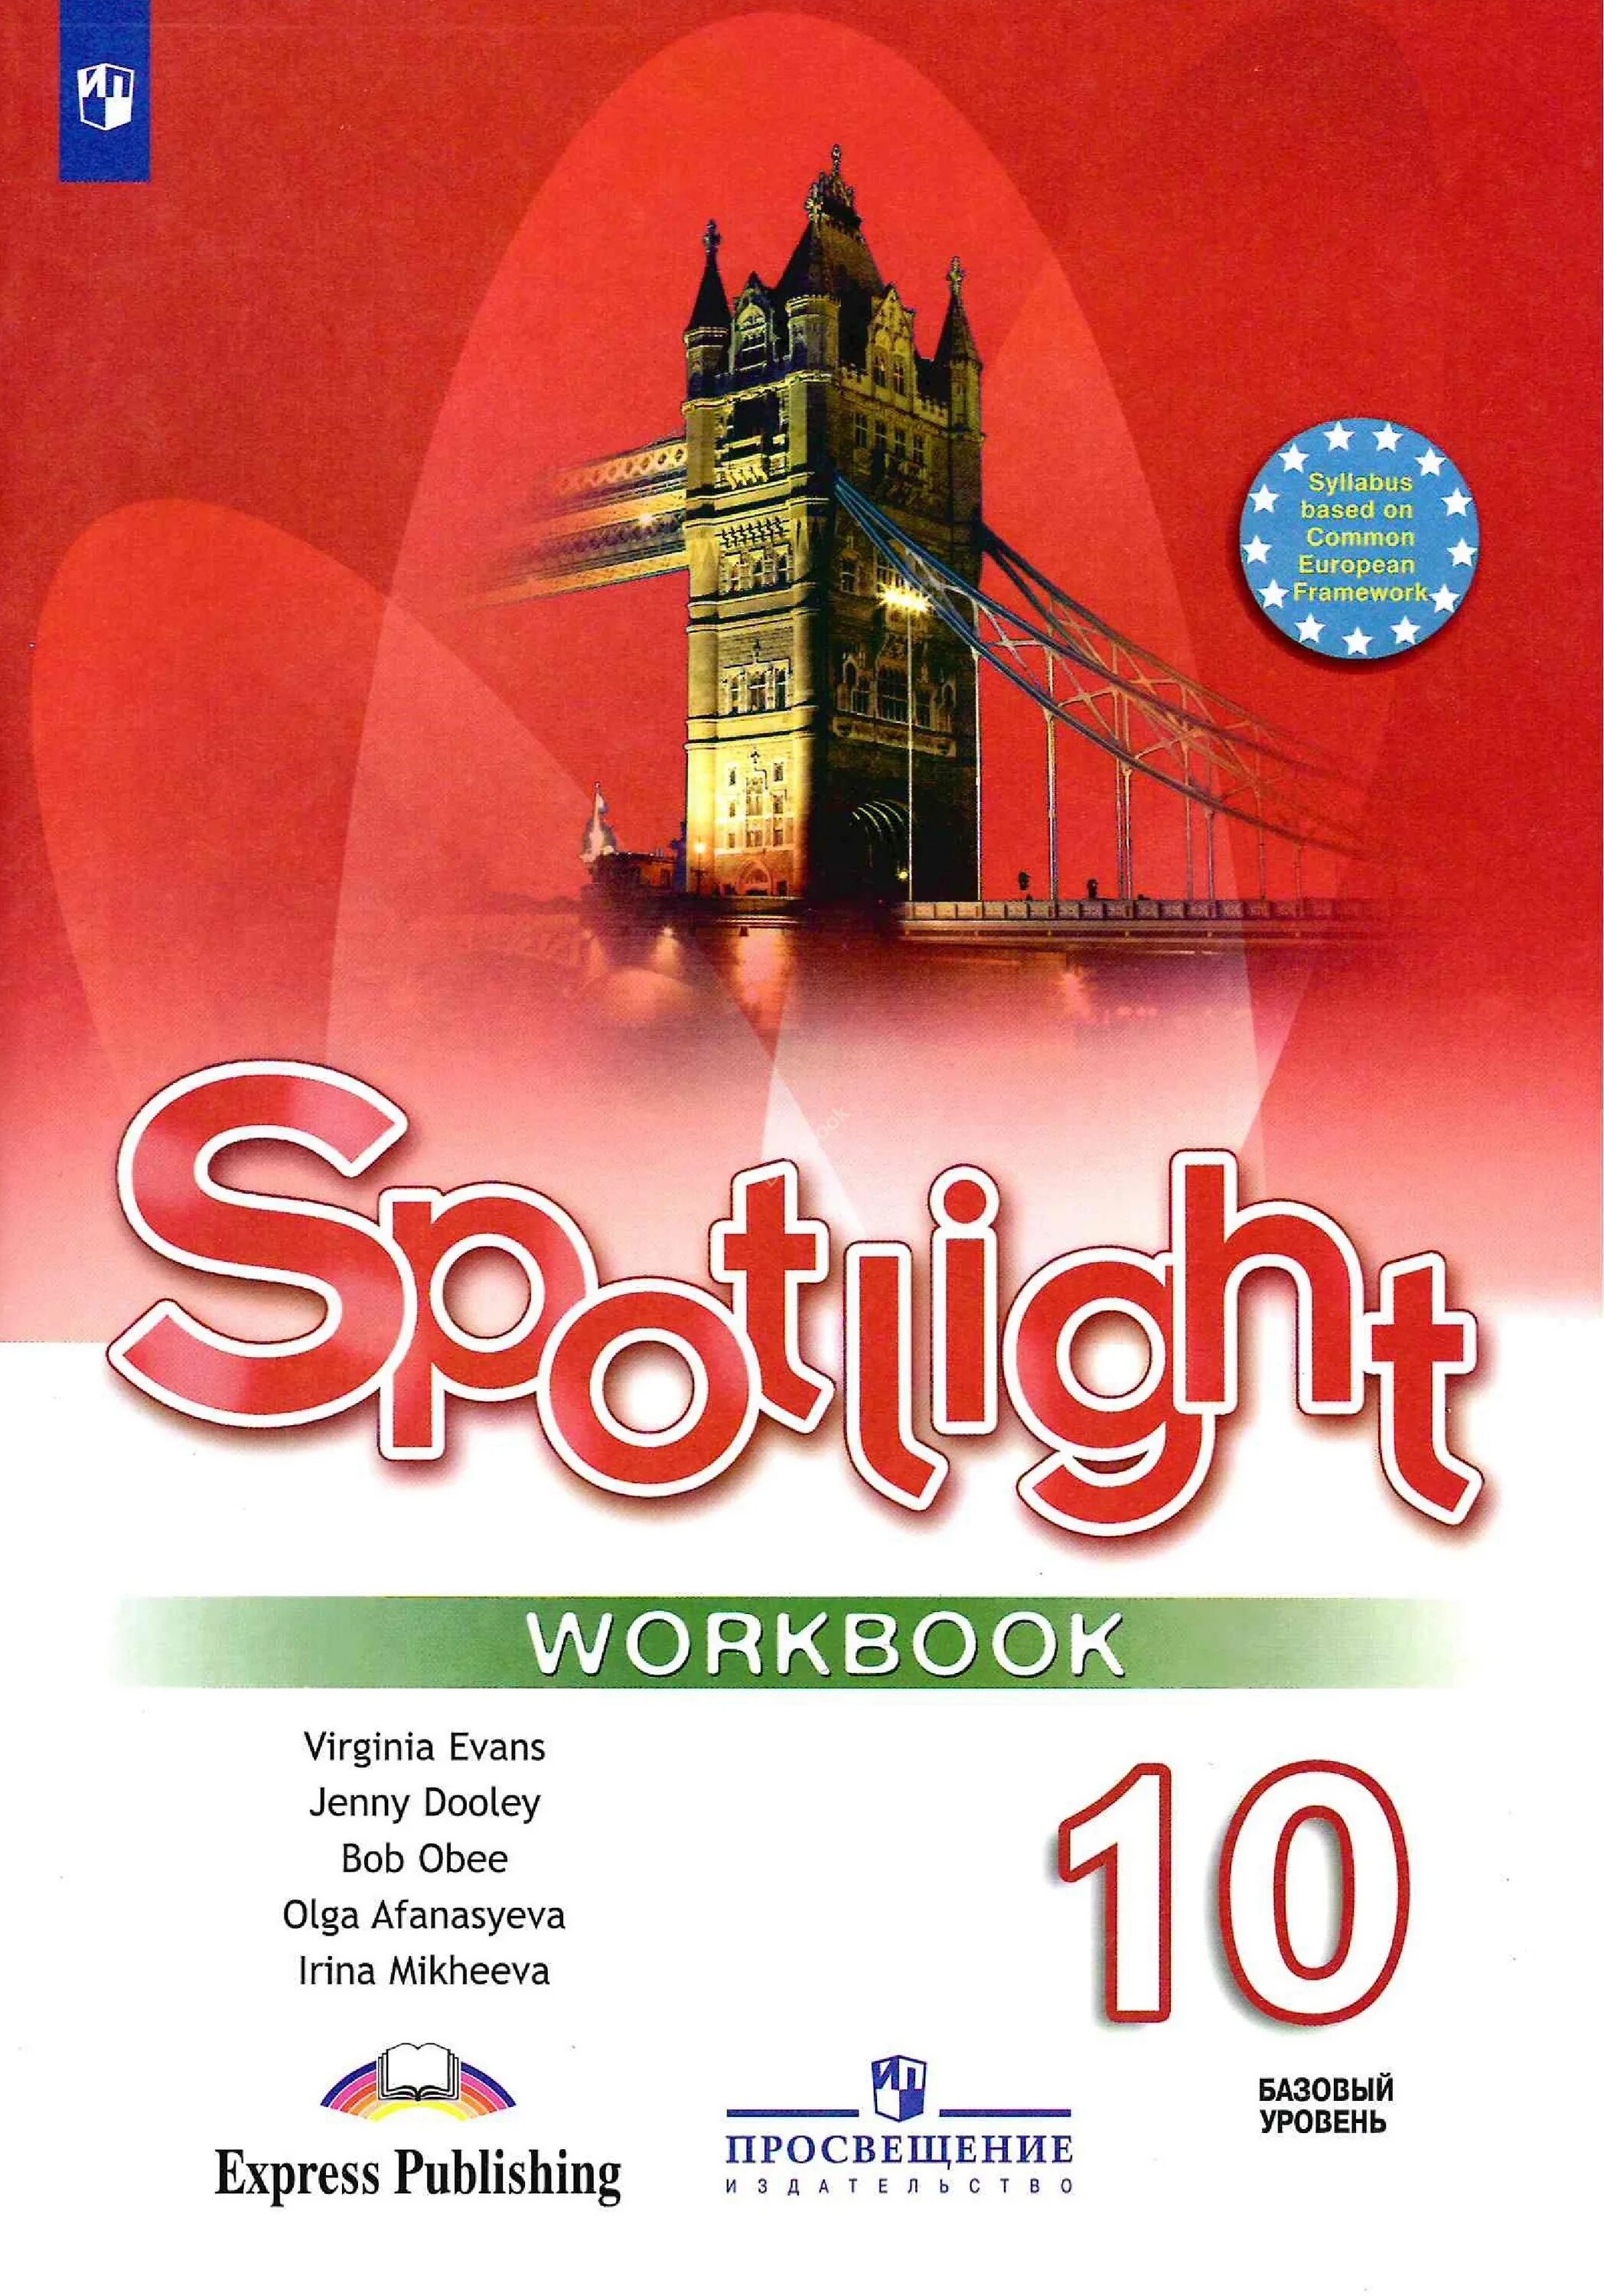 Spotlight teachers 9. Workbook Spotlight 5 класс ваулина. Spotlight 5 Workbook английский язык Эванс. Англ 5 класс рабочая тетрадь Spotlight. Тетради для английского языка 5 класс спотлайт.